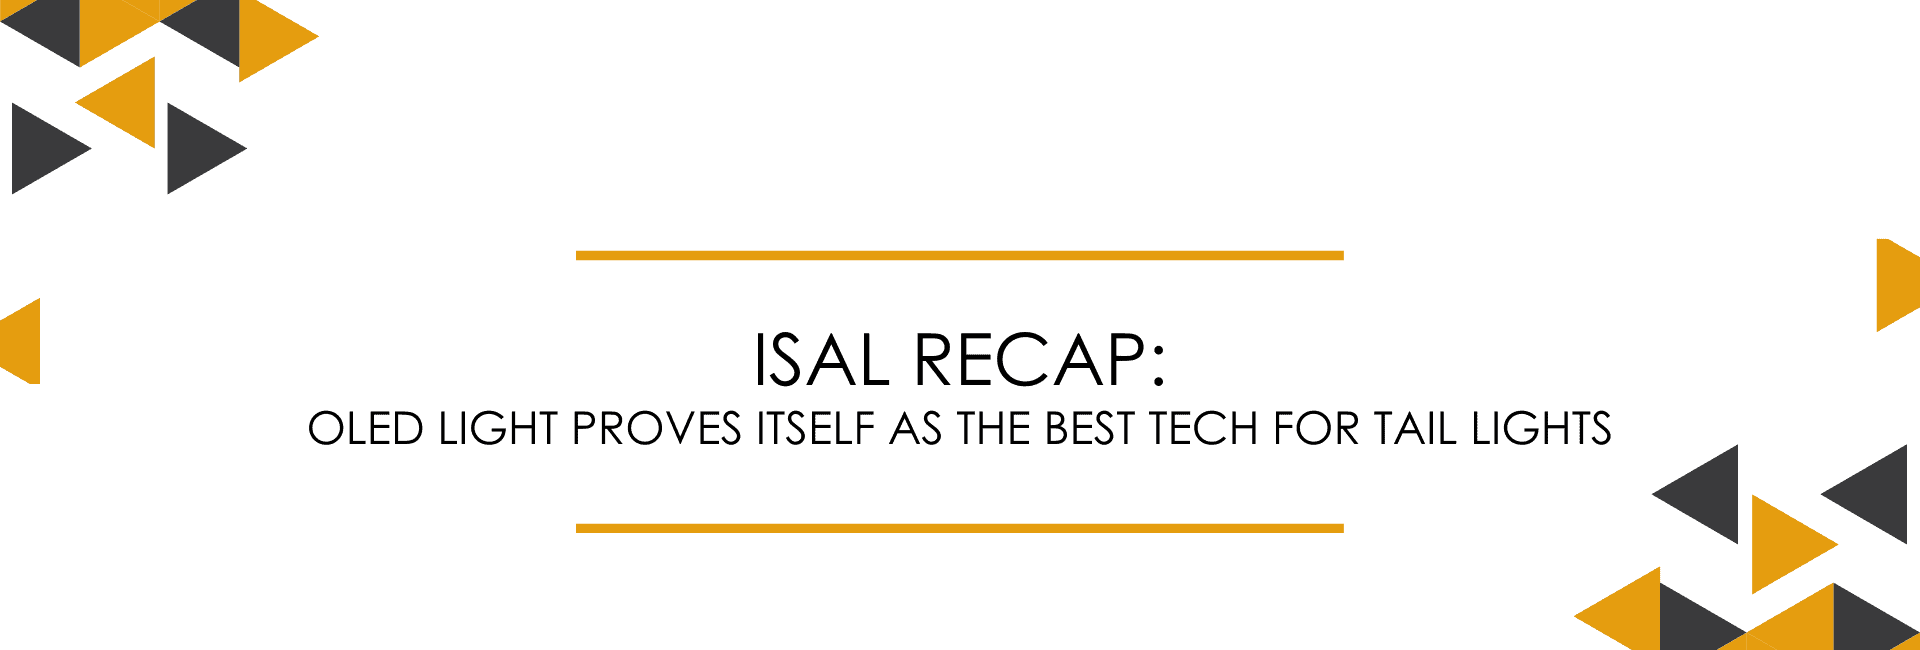 ISAL 2019 Recap of OLED Light Technology | OLEDWorks